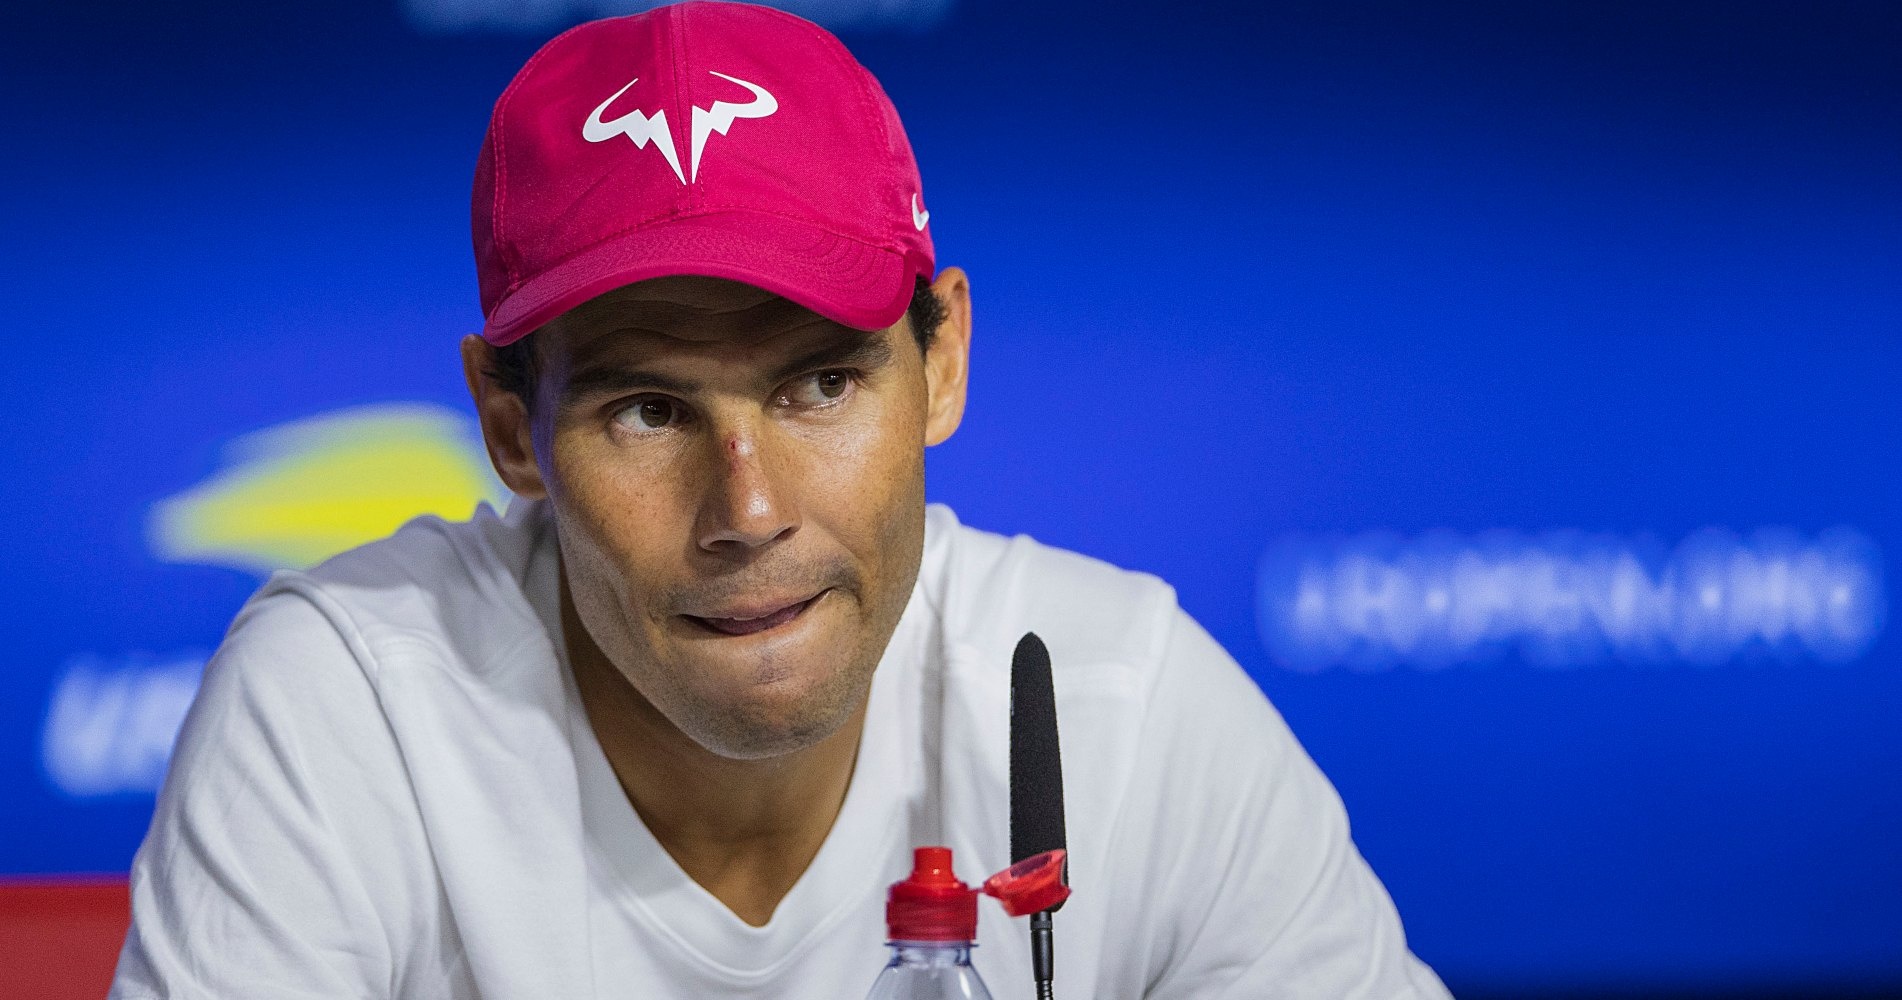 Tennis: Nadal shows his nostalgic side